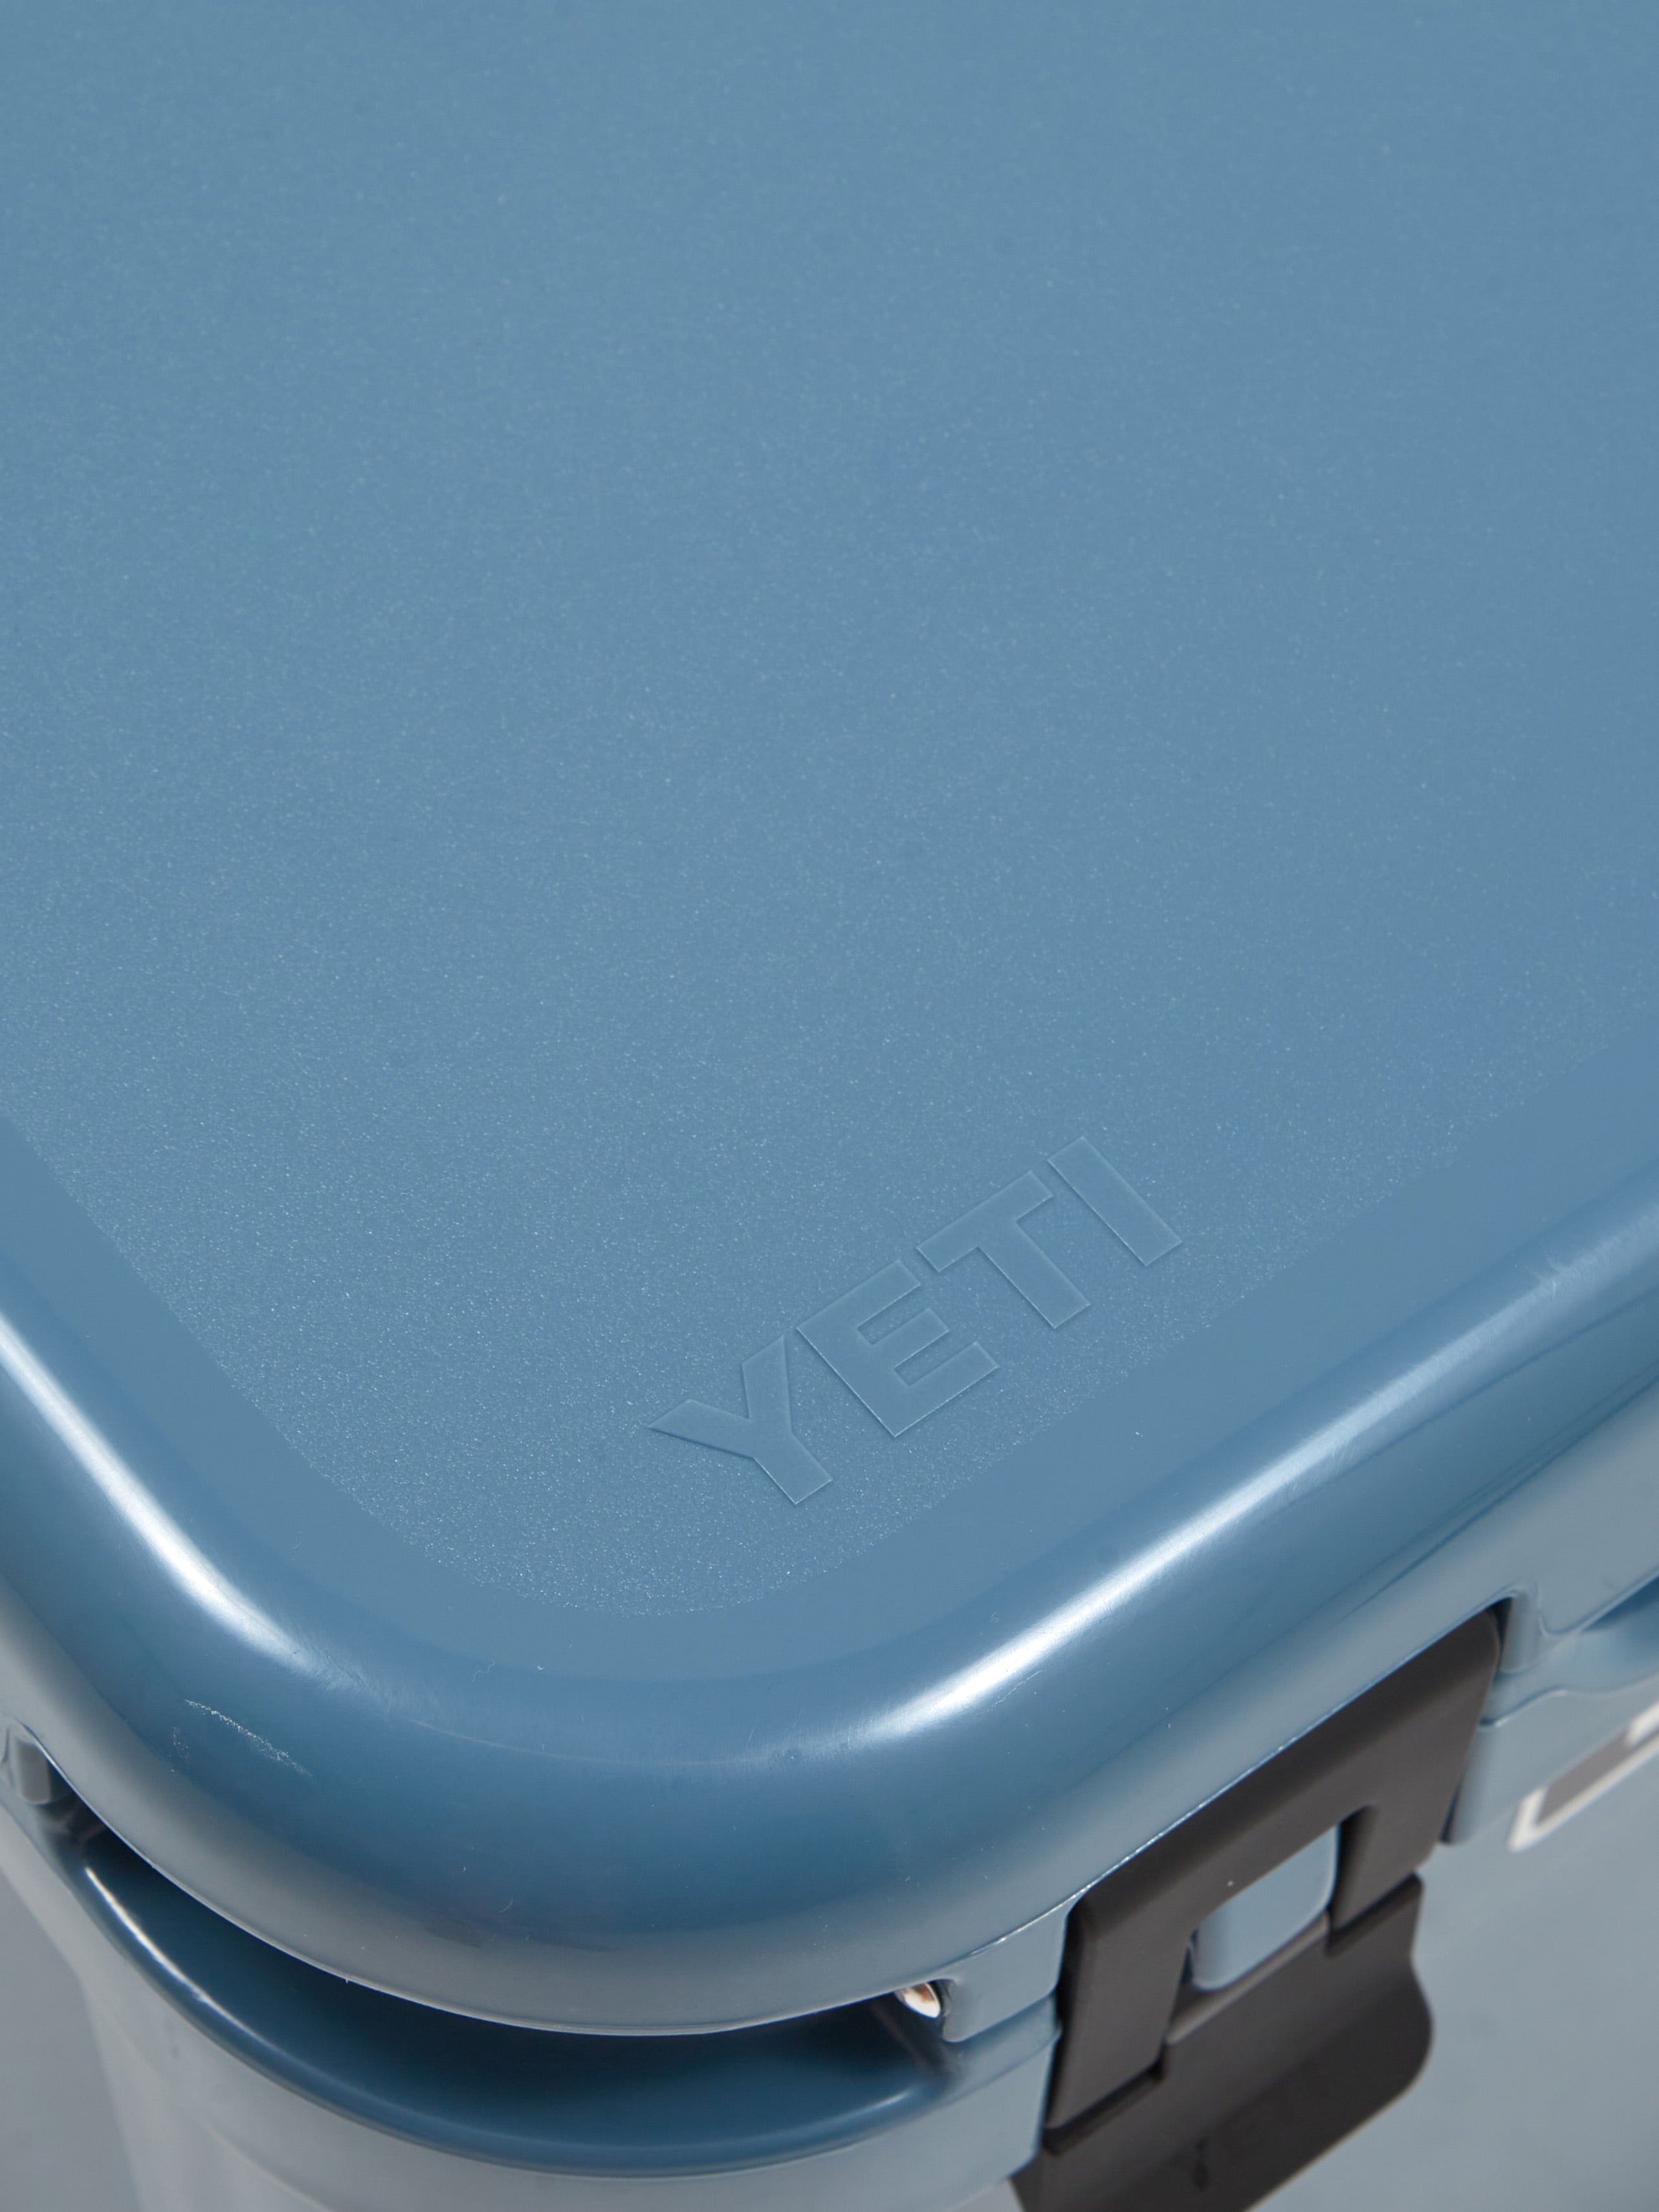 Nevera YETI Roadie 24 Cool Box - Nordic Blue, compra online